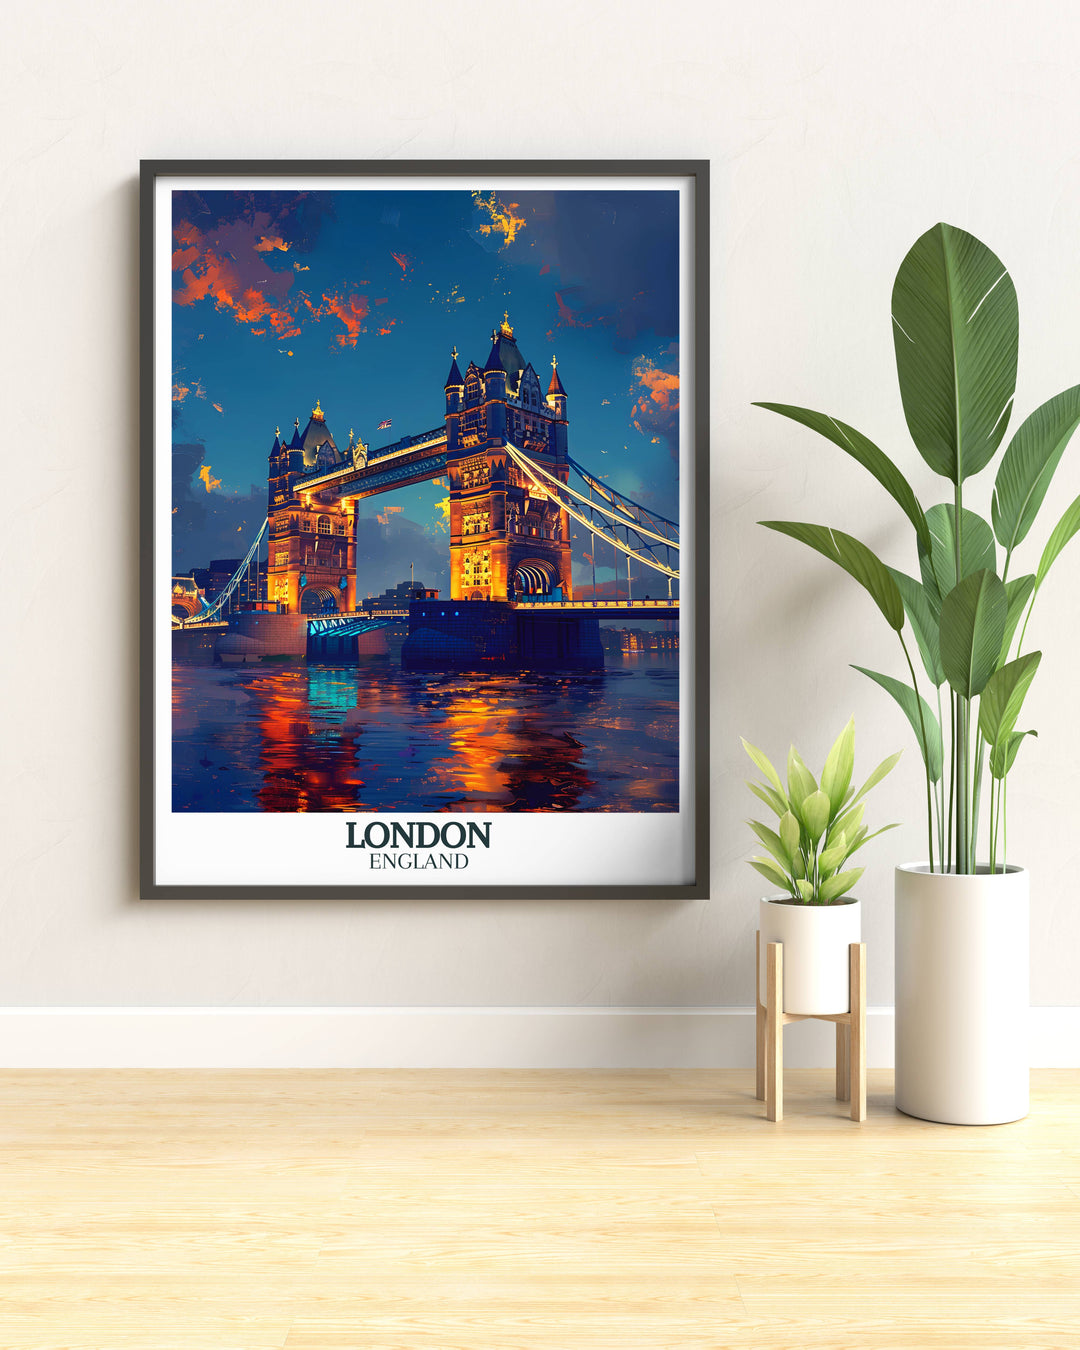 Print of Tower Bridge, showcasing its grandeur against the London skyline, ideal for adding historical elegance.